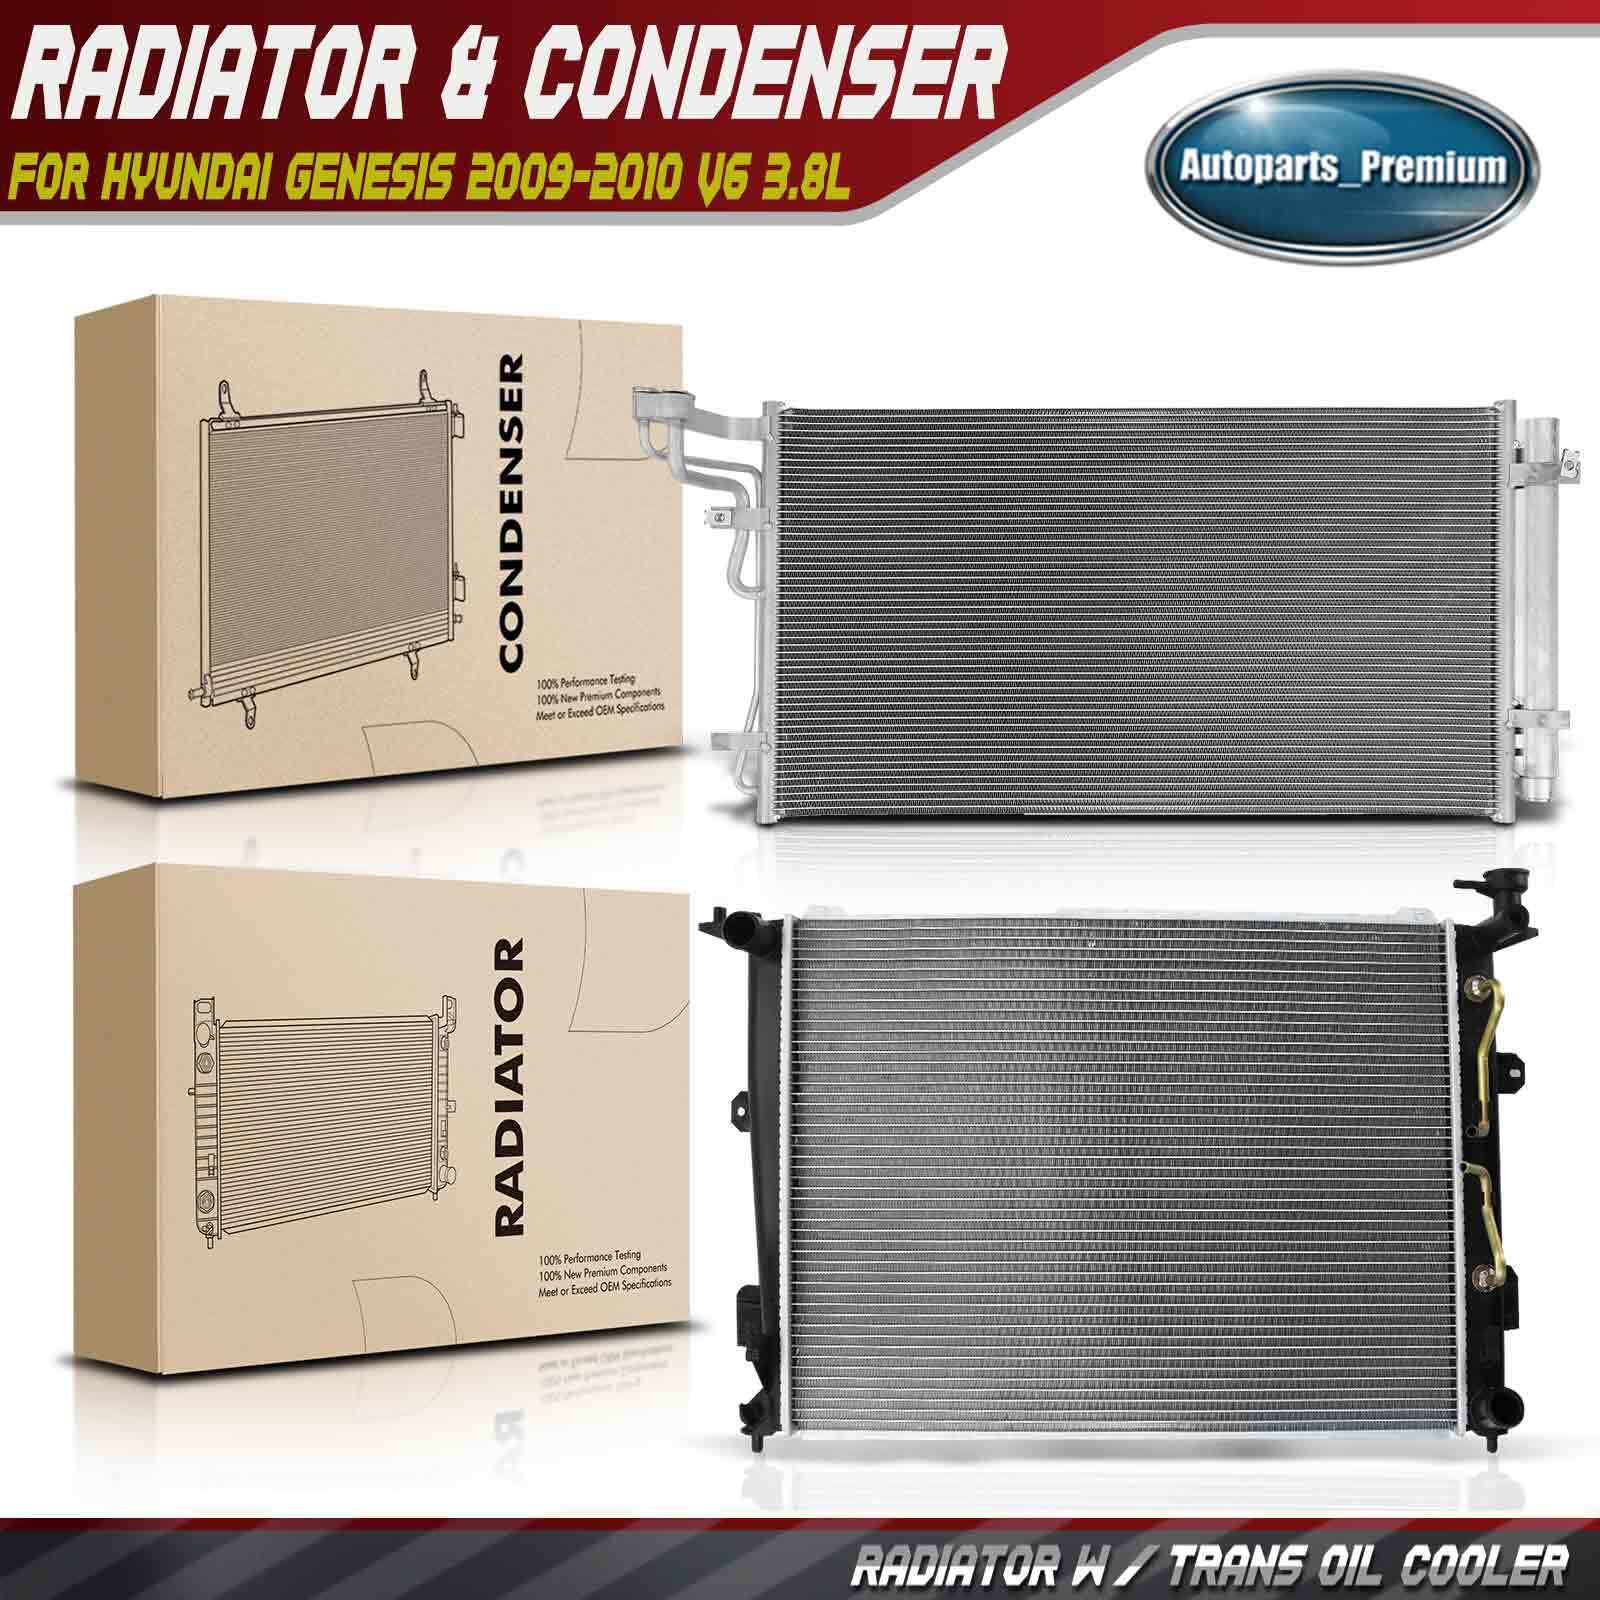 2x Radiator & AC Condenser Cooling Kit for Hyundai Genesis 2009-2010 V6 3.8L